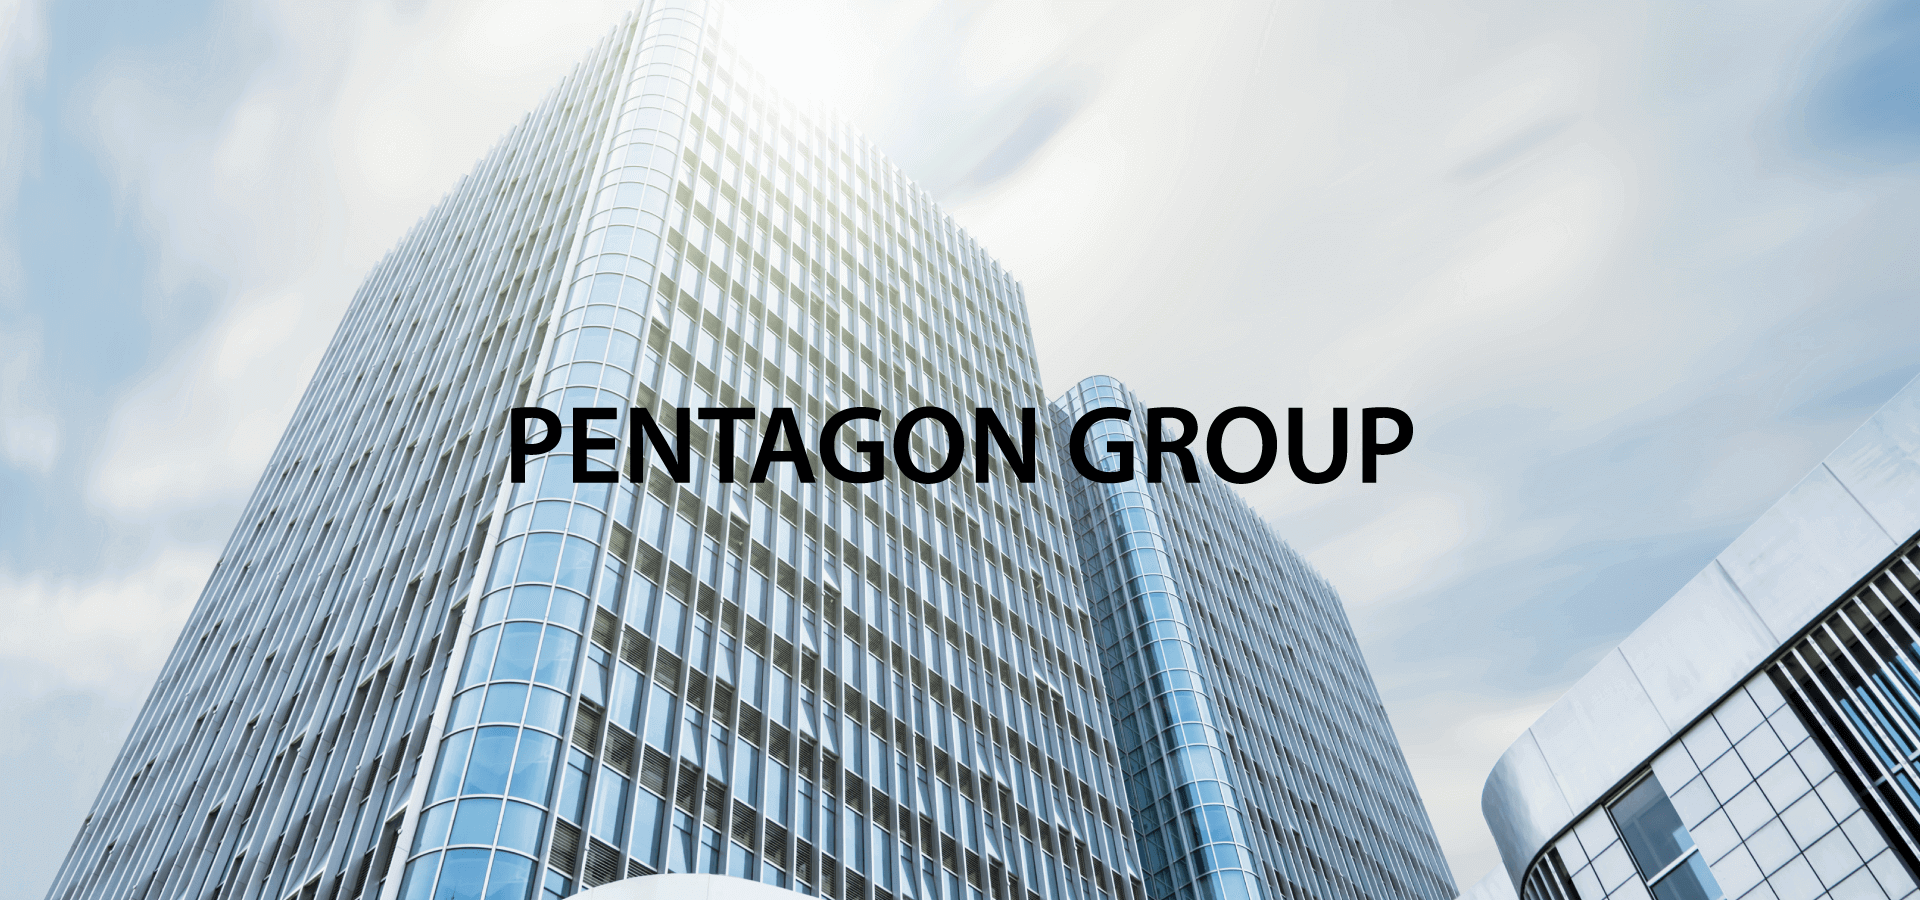 Pentagon Group